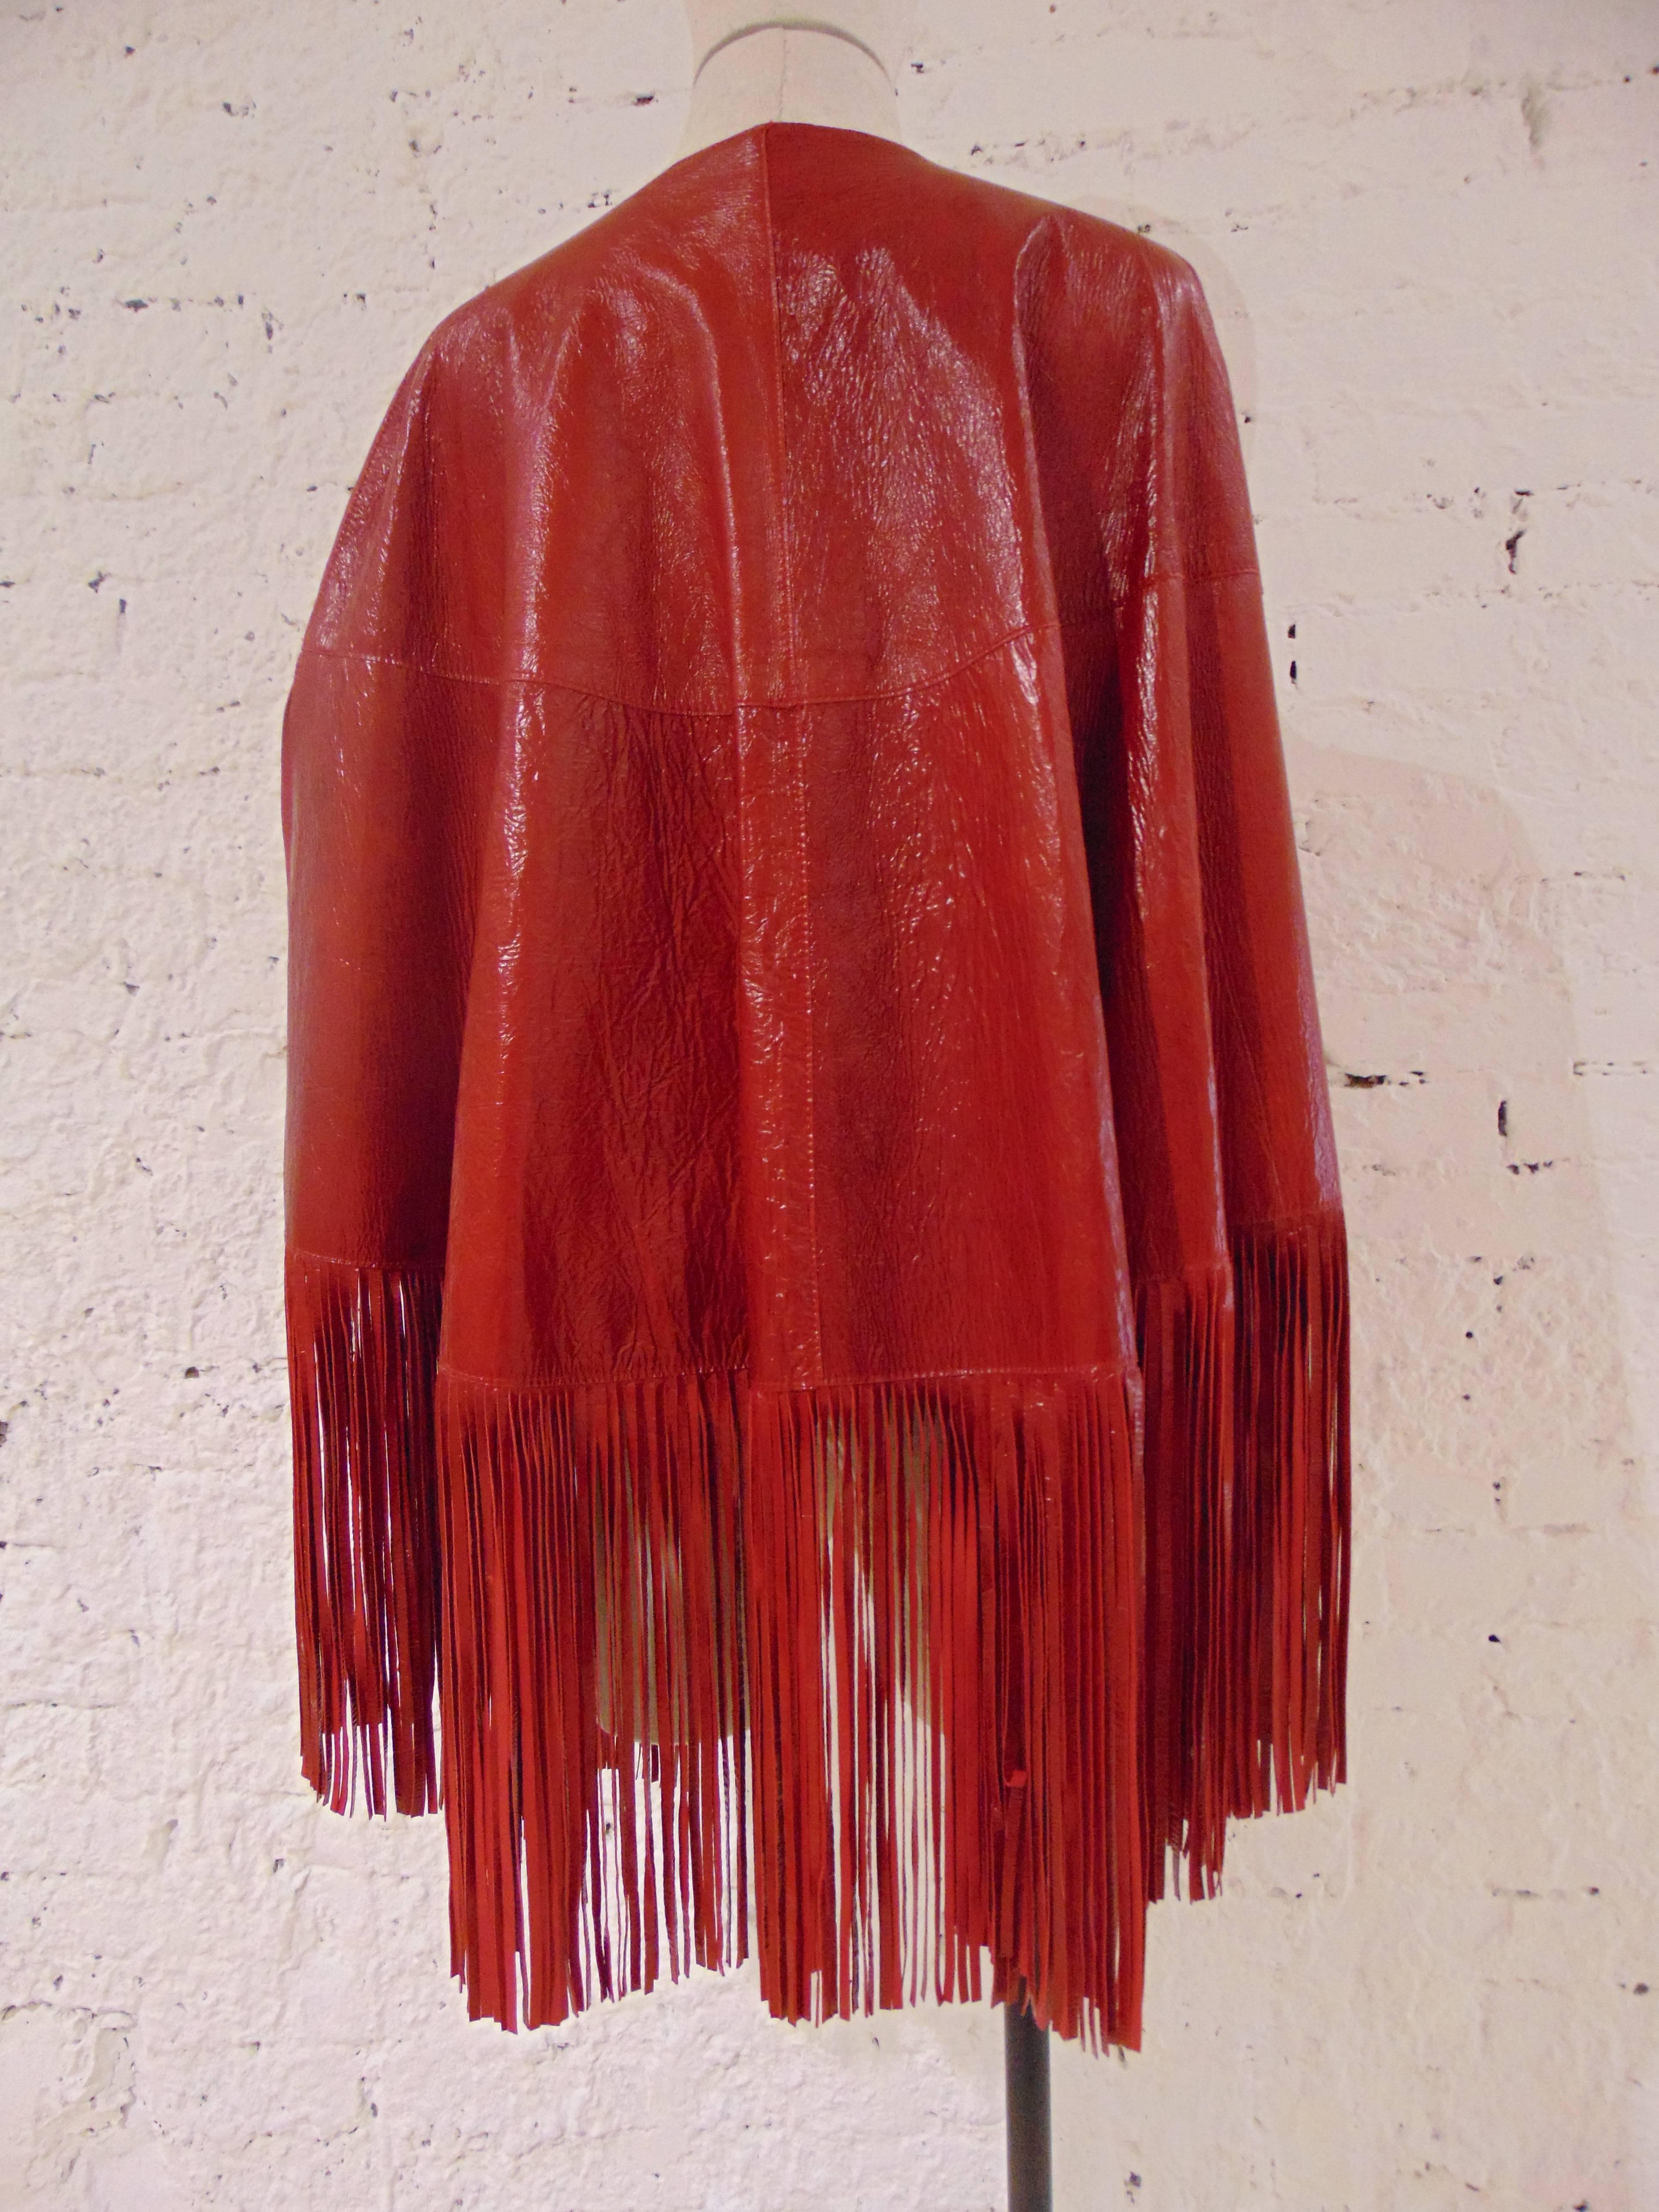 Women's Leitmotiv unworn NWOT real leather red fringes jacket